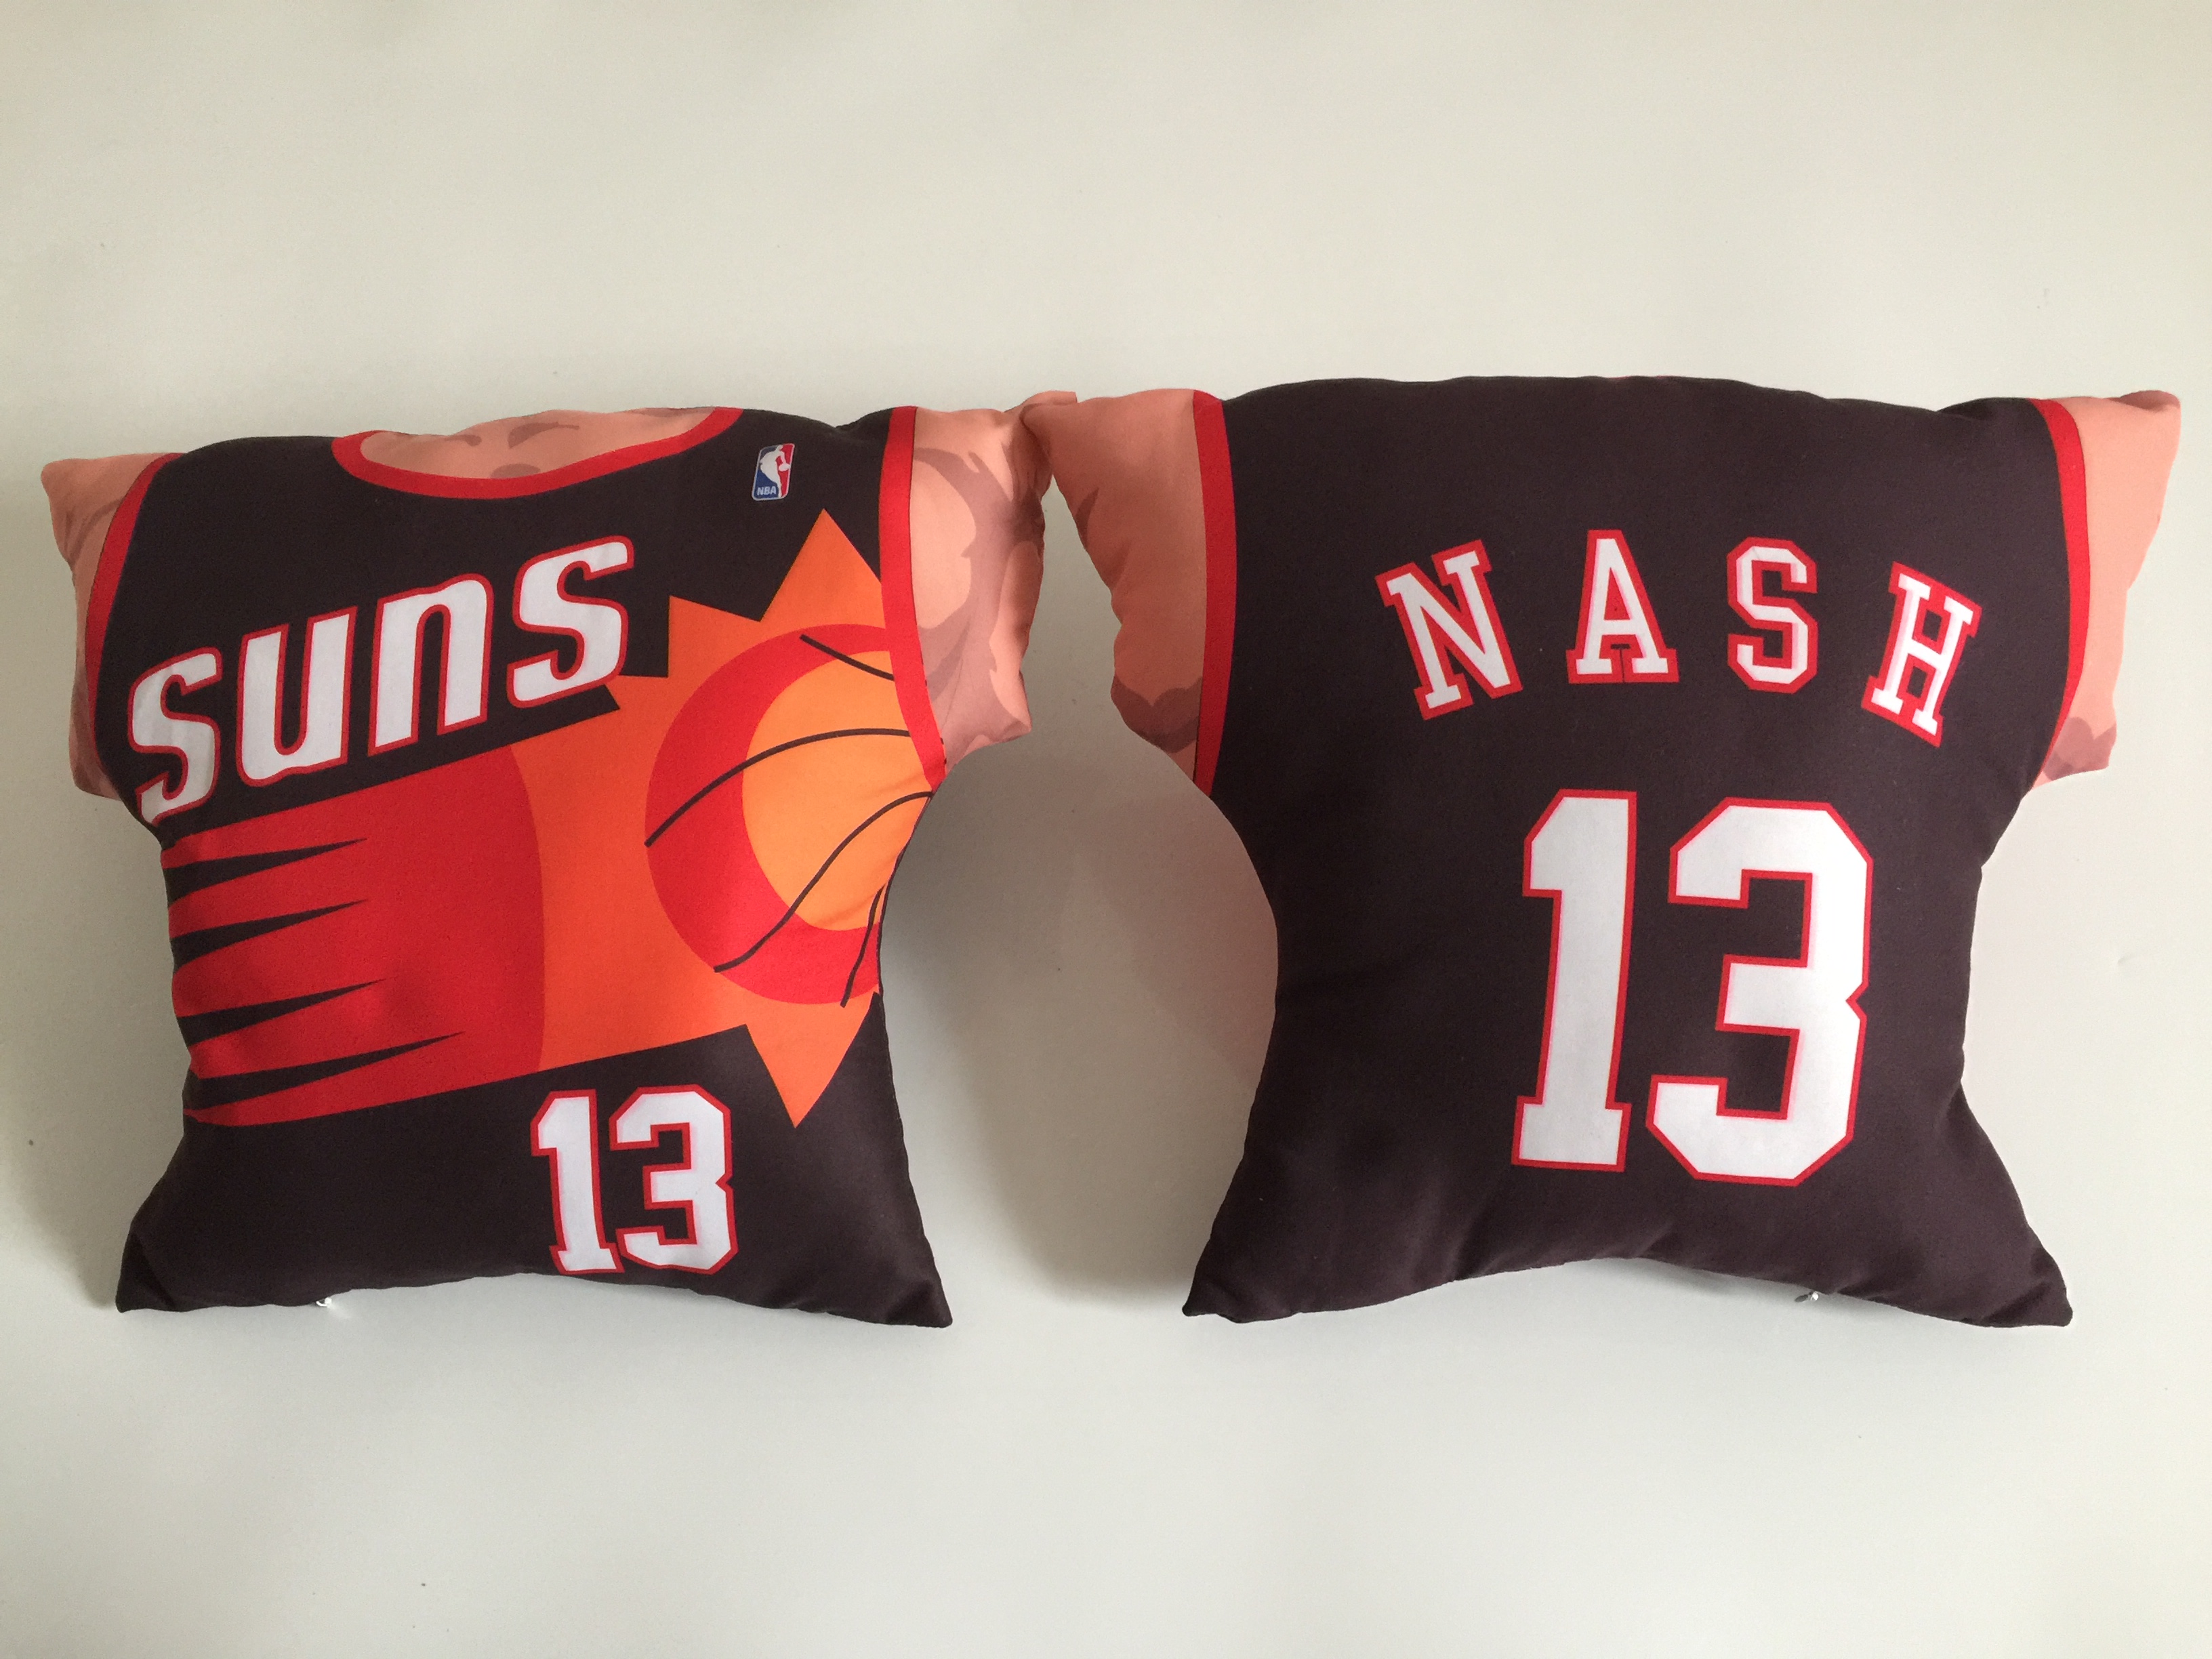 Phoenix Suns 13 Steve Nash Black NBA Pillow